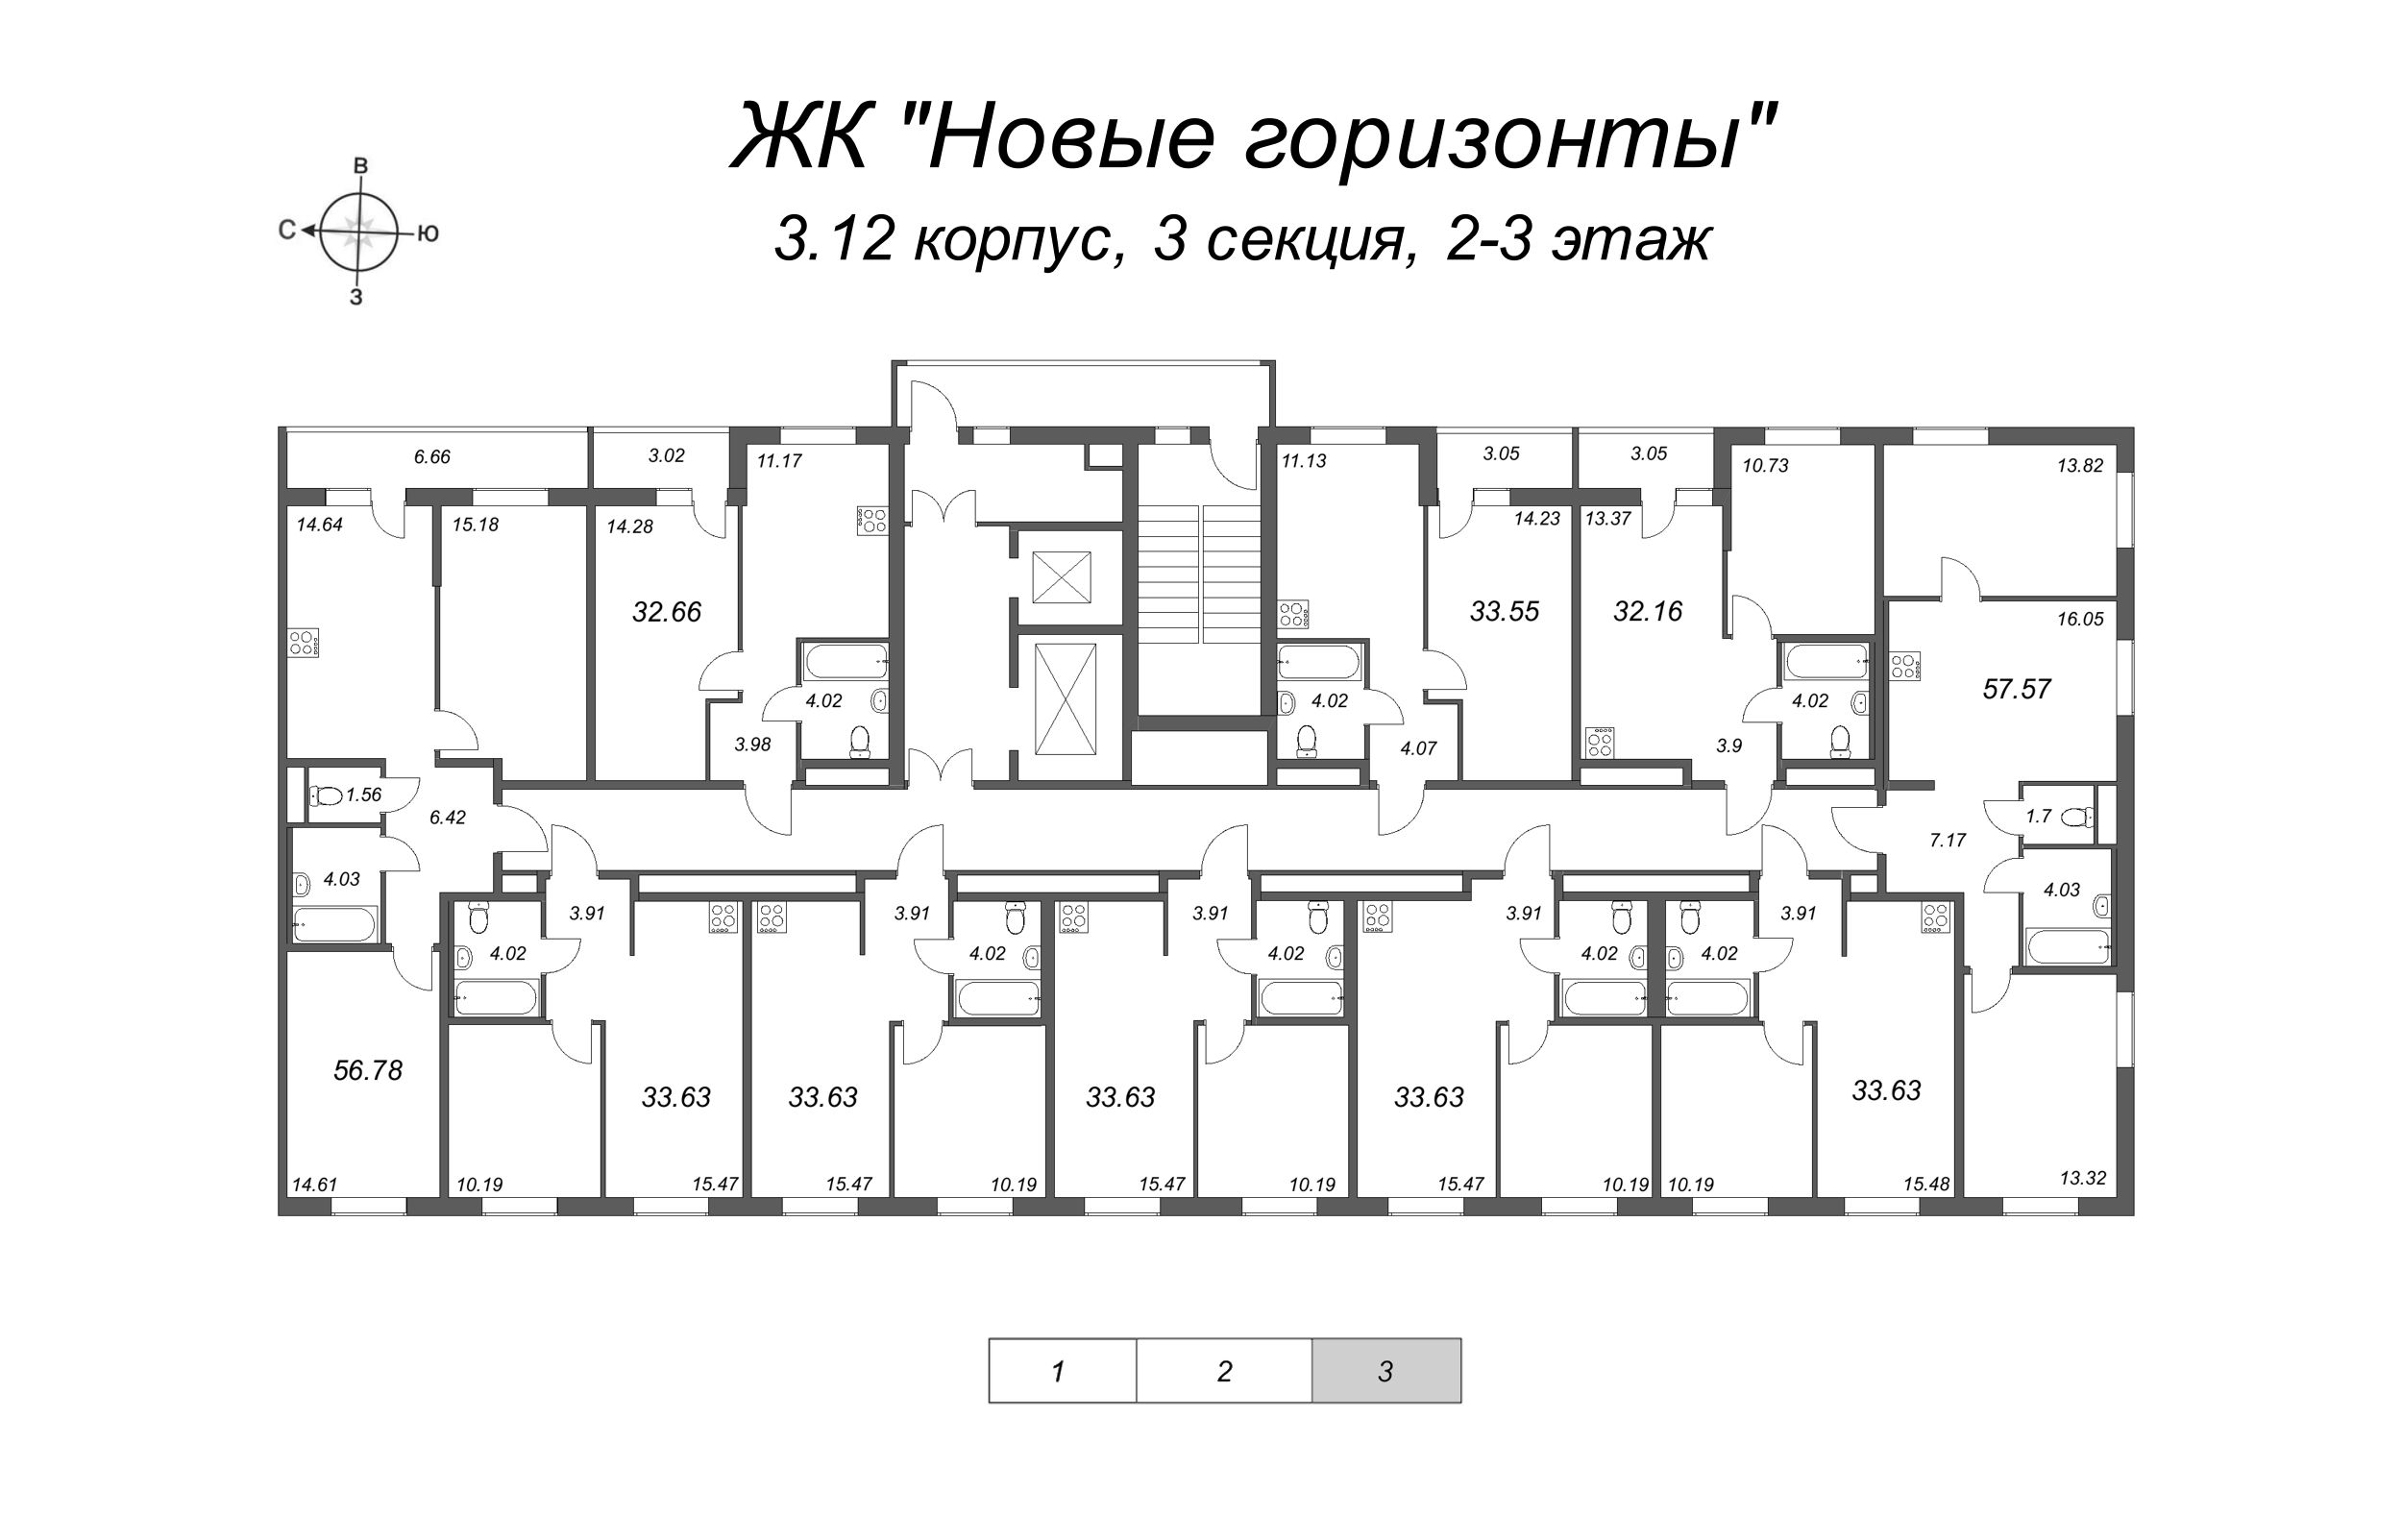 2-комнатная (Евро) квартира, 33.63 м² - планировка этажа